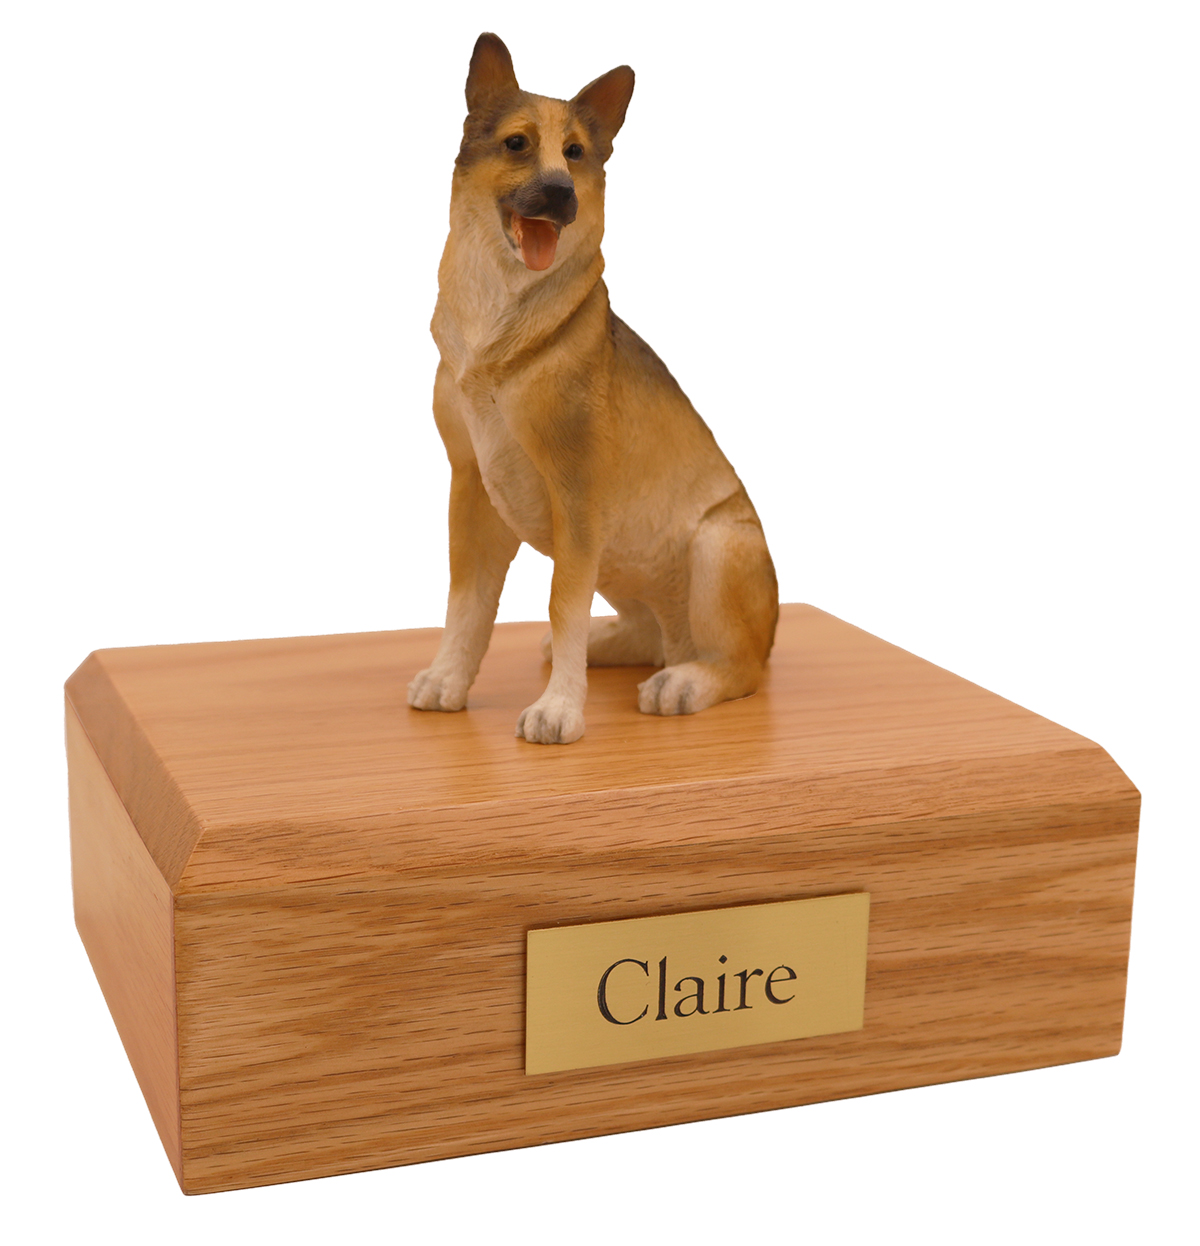 Dog, German Shepherd Sitting - Figurine Urn